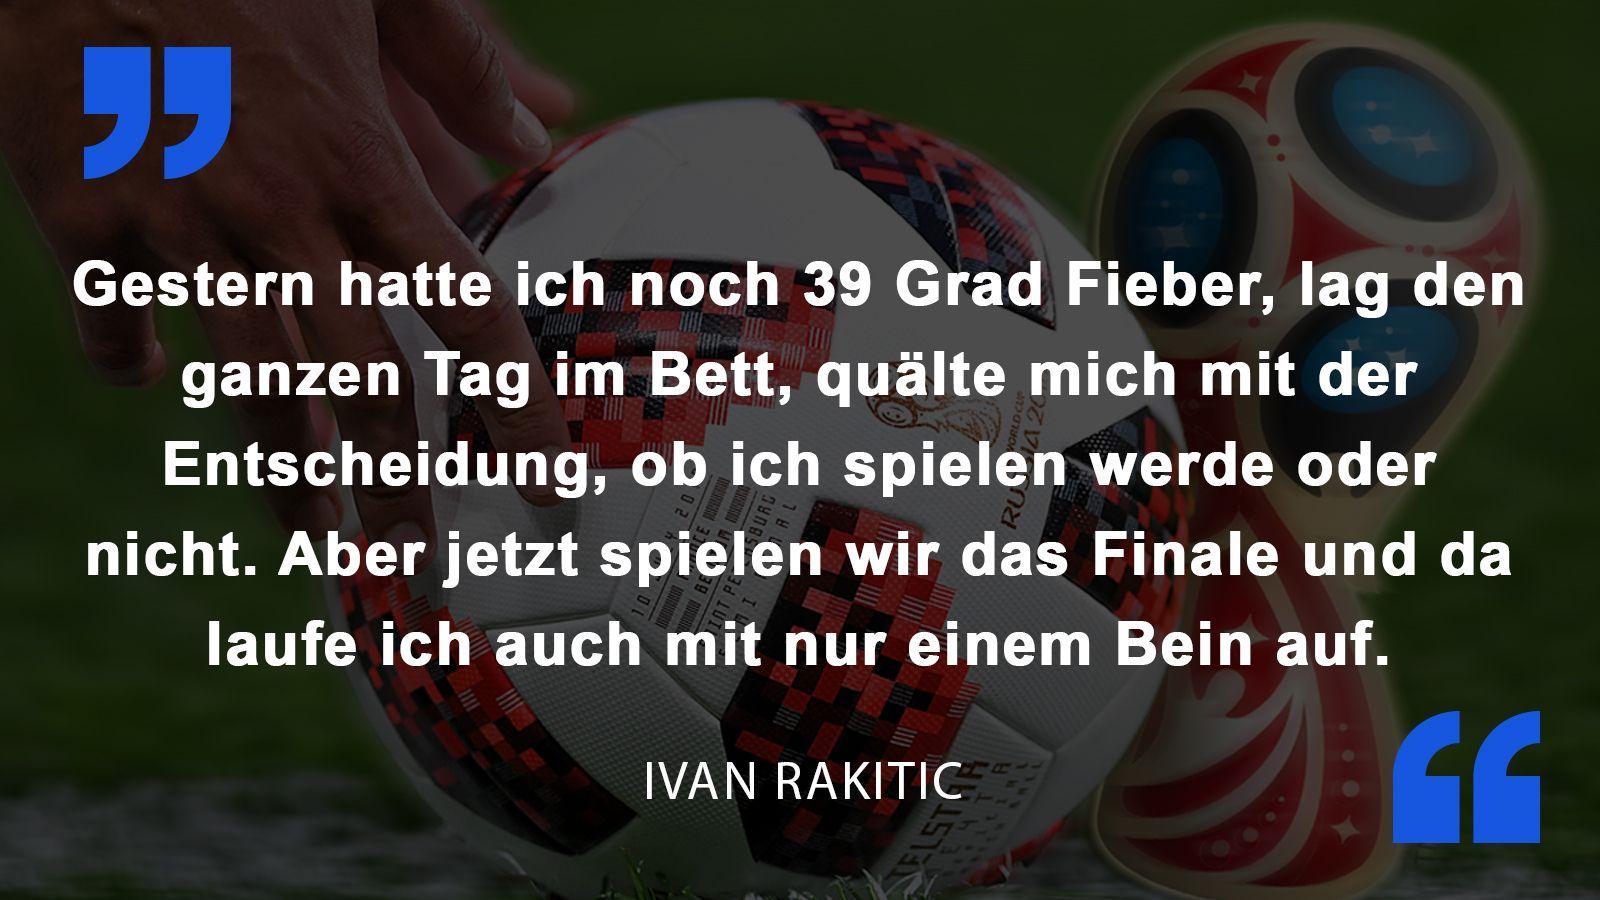 
                <strong>Ivan Rakitic</strong><br>
                Kroatiens Ivan Rakitic über seinen Zustand beim Halbfinal-Sieg in der Verlängerung gegen England.
              